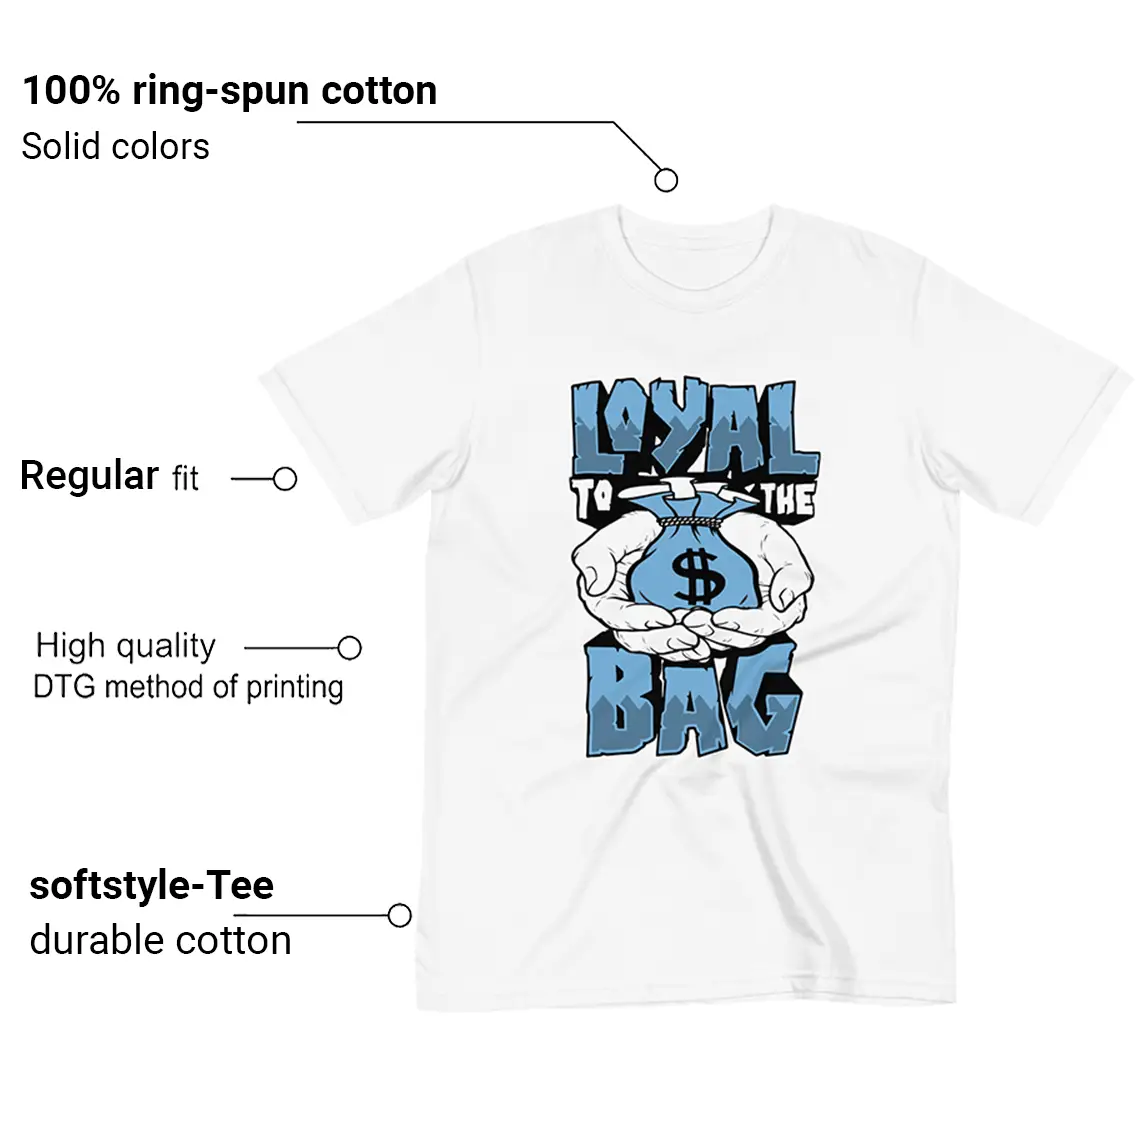 UNC Toe Jordan 1 Shirt - Loyal To The Bag Graphic Features